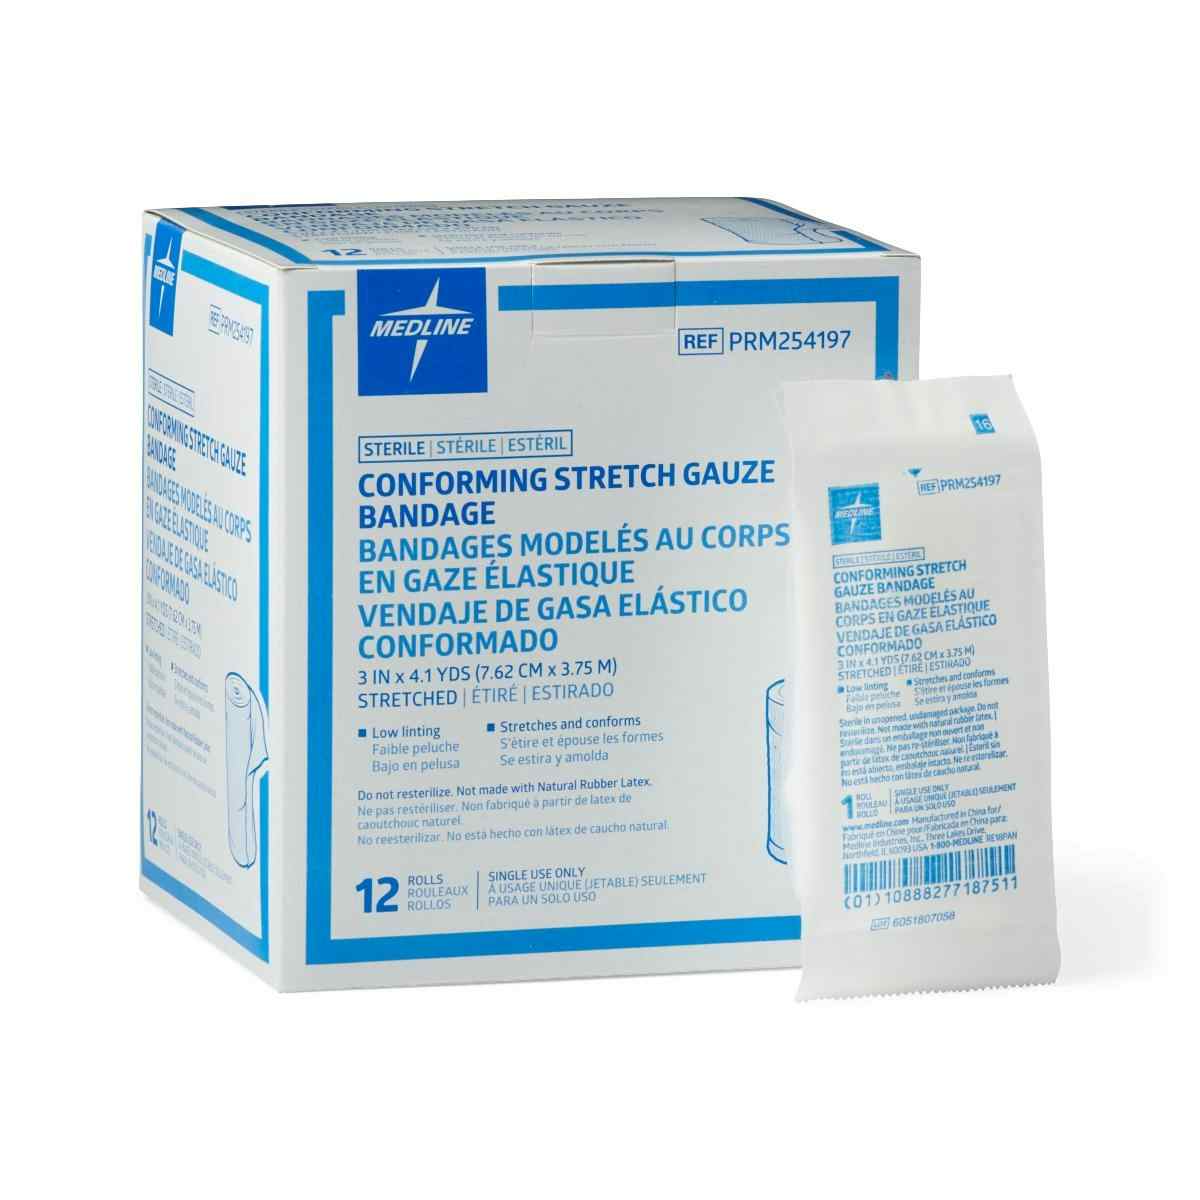 Medline Conforming Stretch Gauze Bandages, Light Weight, PRM254197, 3" X 4.1 yd. - Case of 96